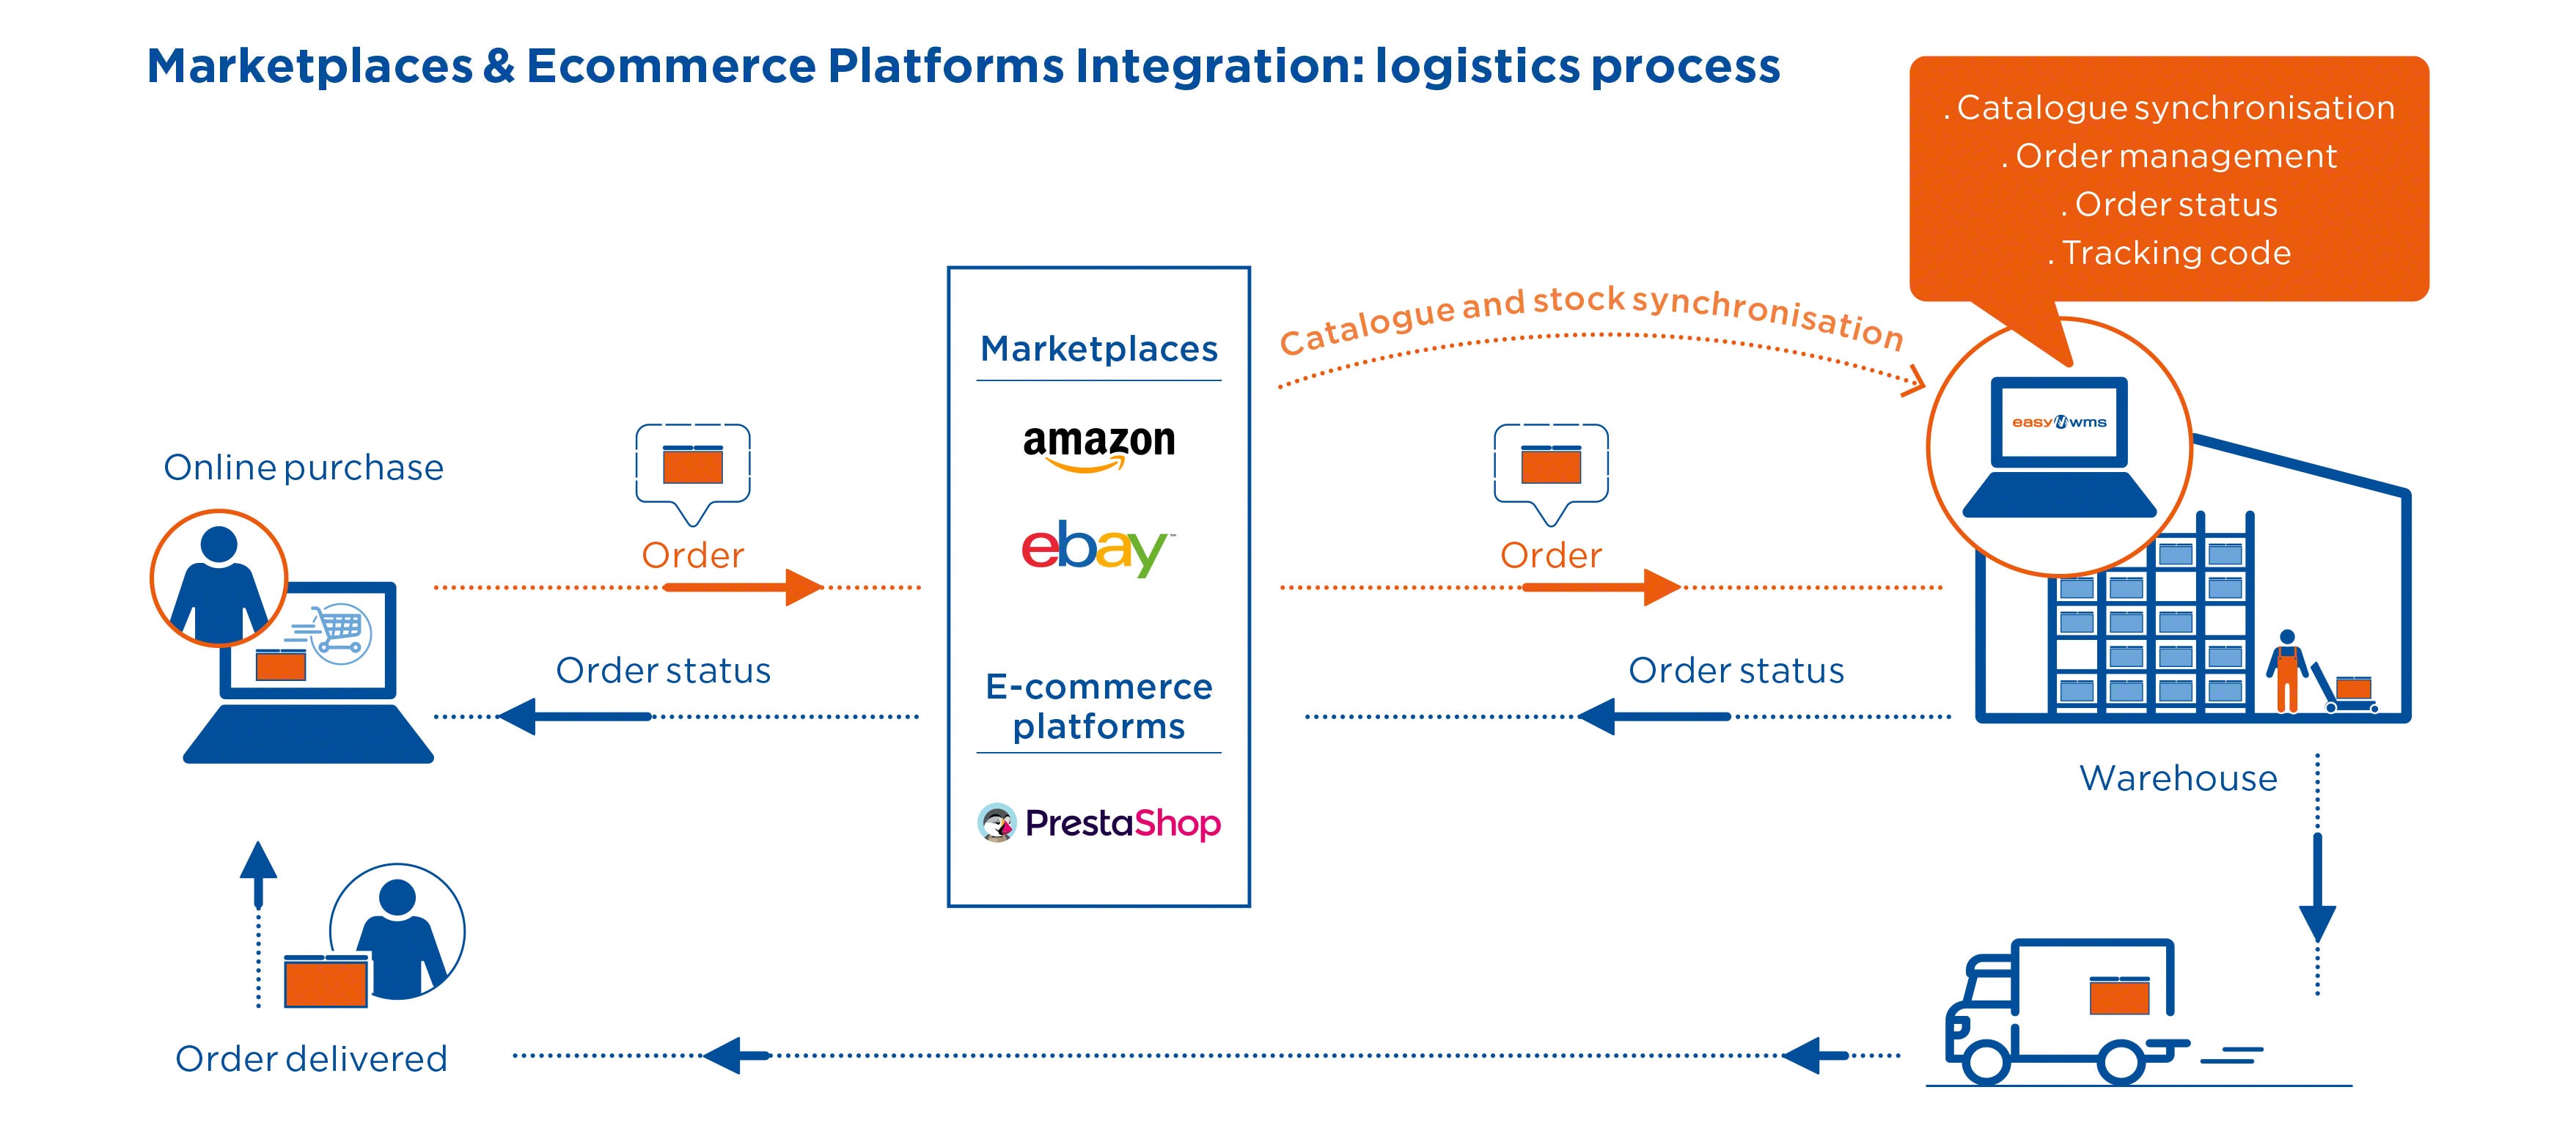 Marketplaces & Ecommerce Platforms integration: logistics process